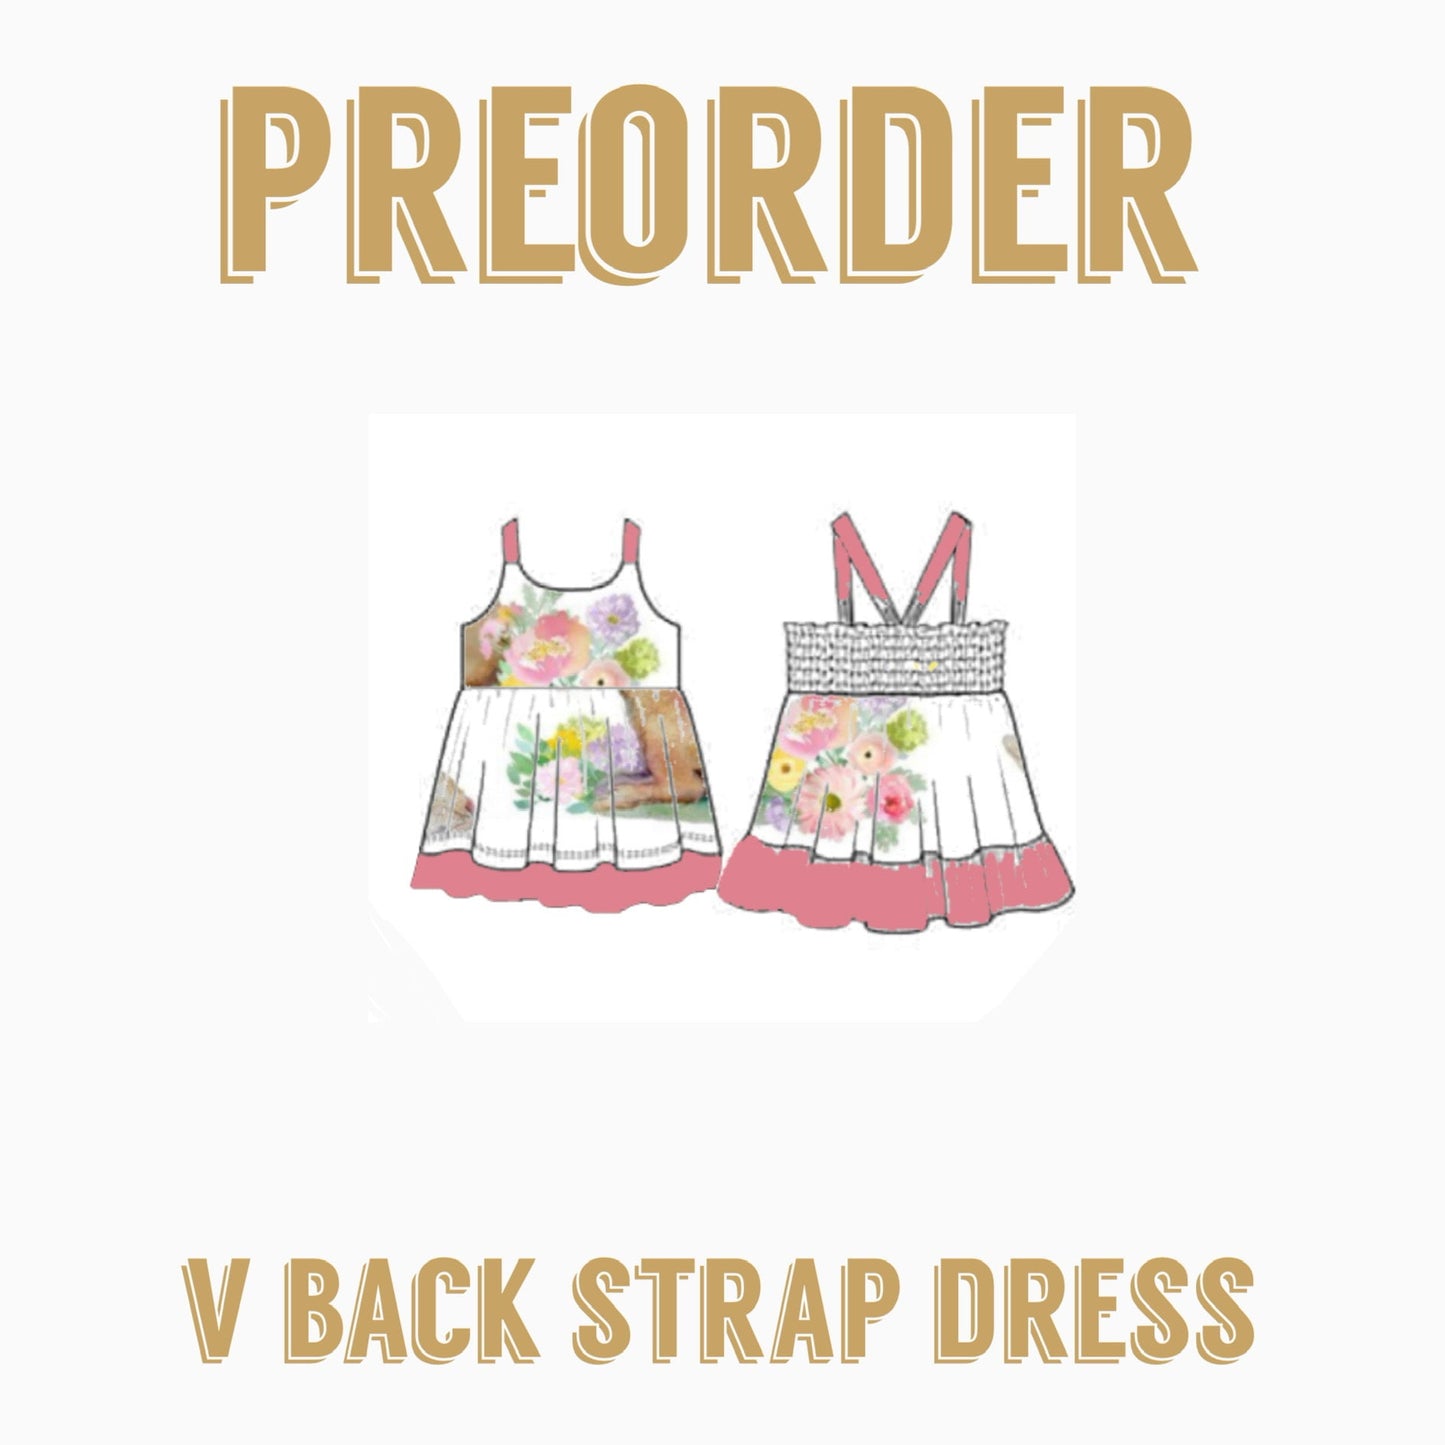 Design your own Woven | V BACK Strap dress